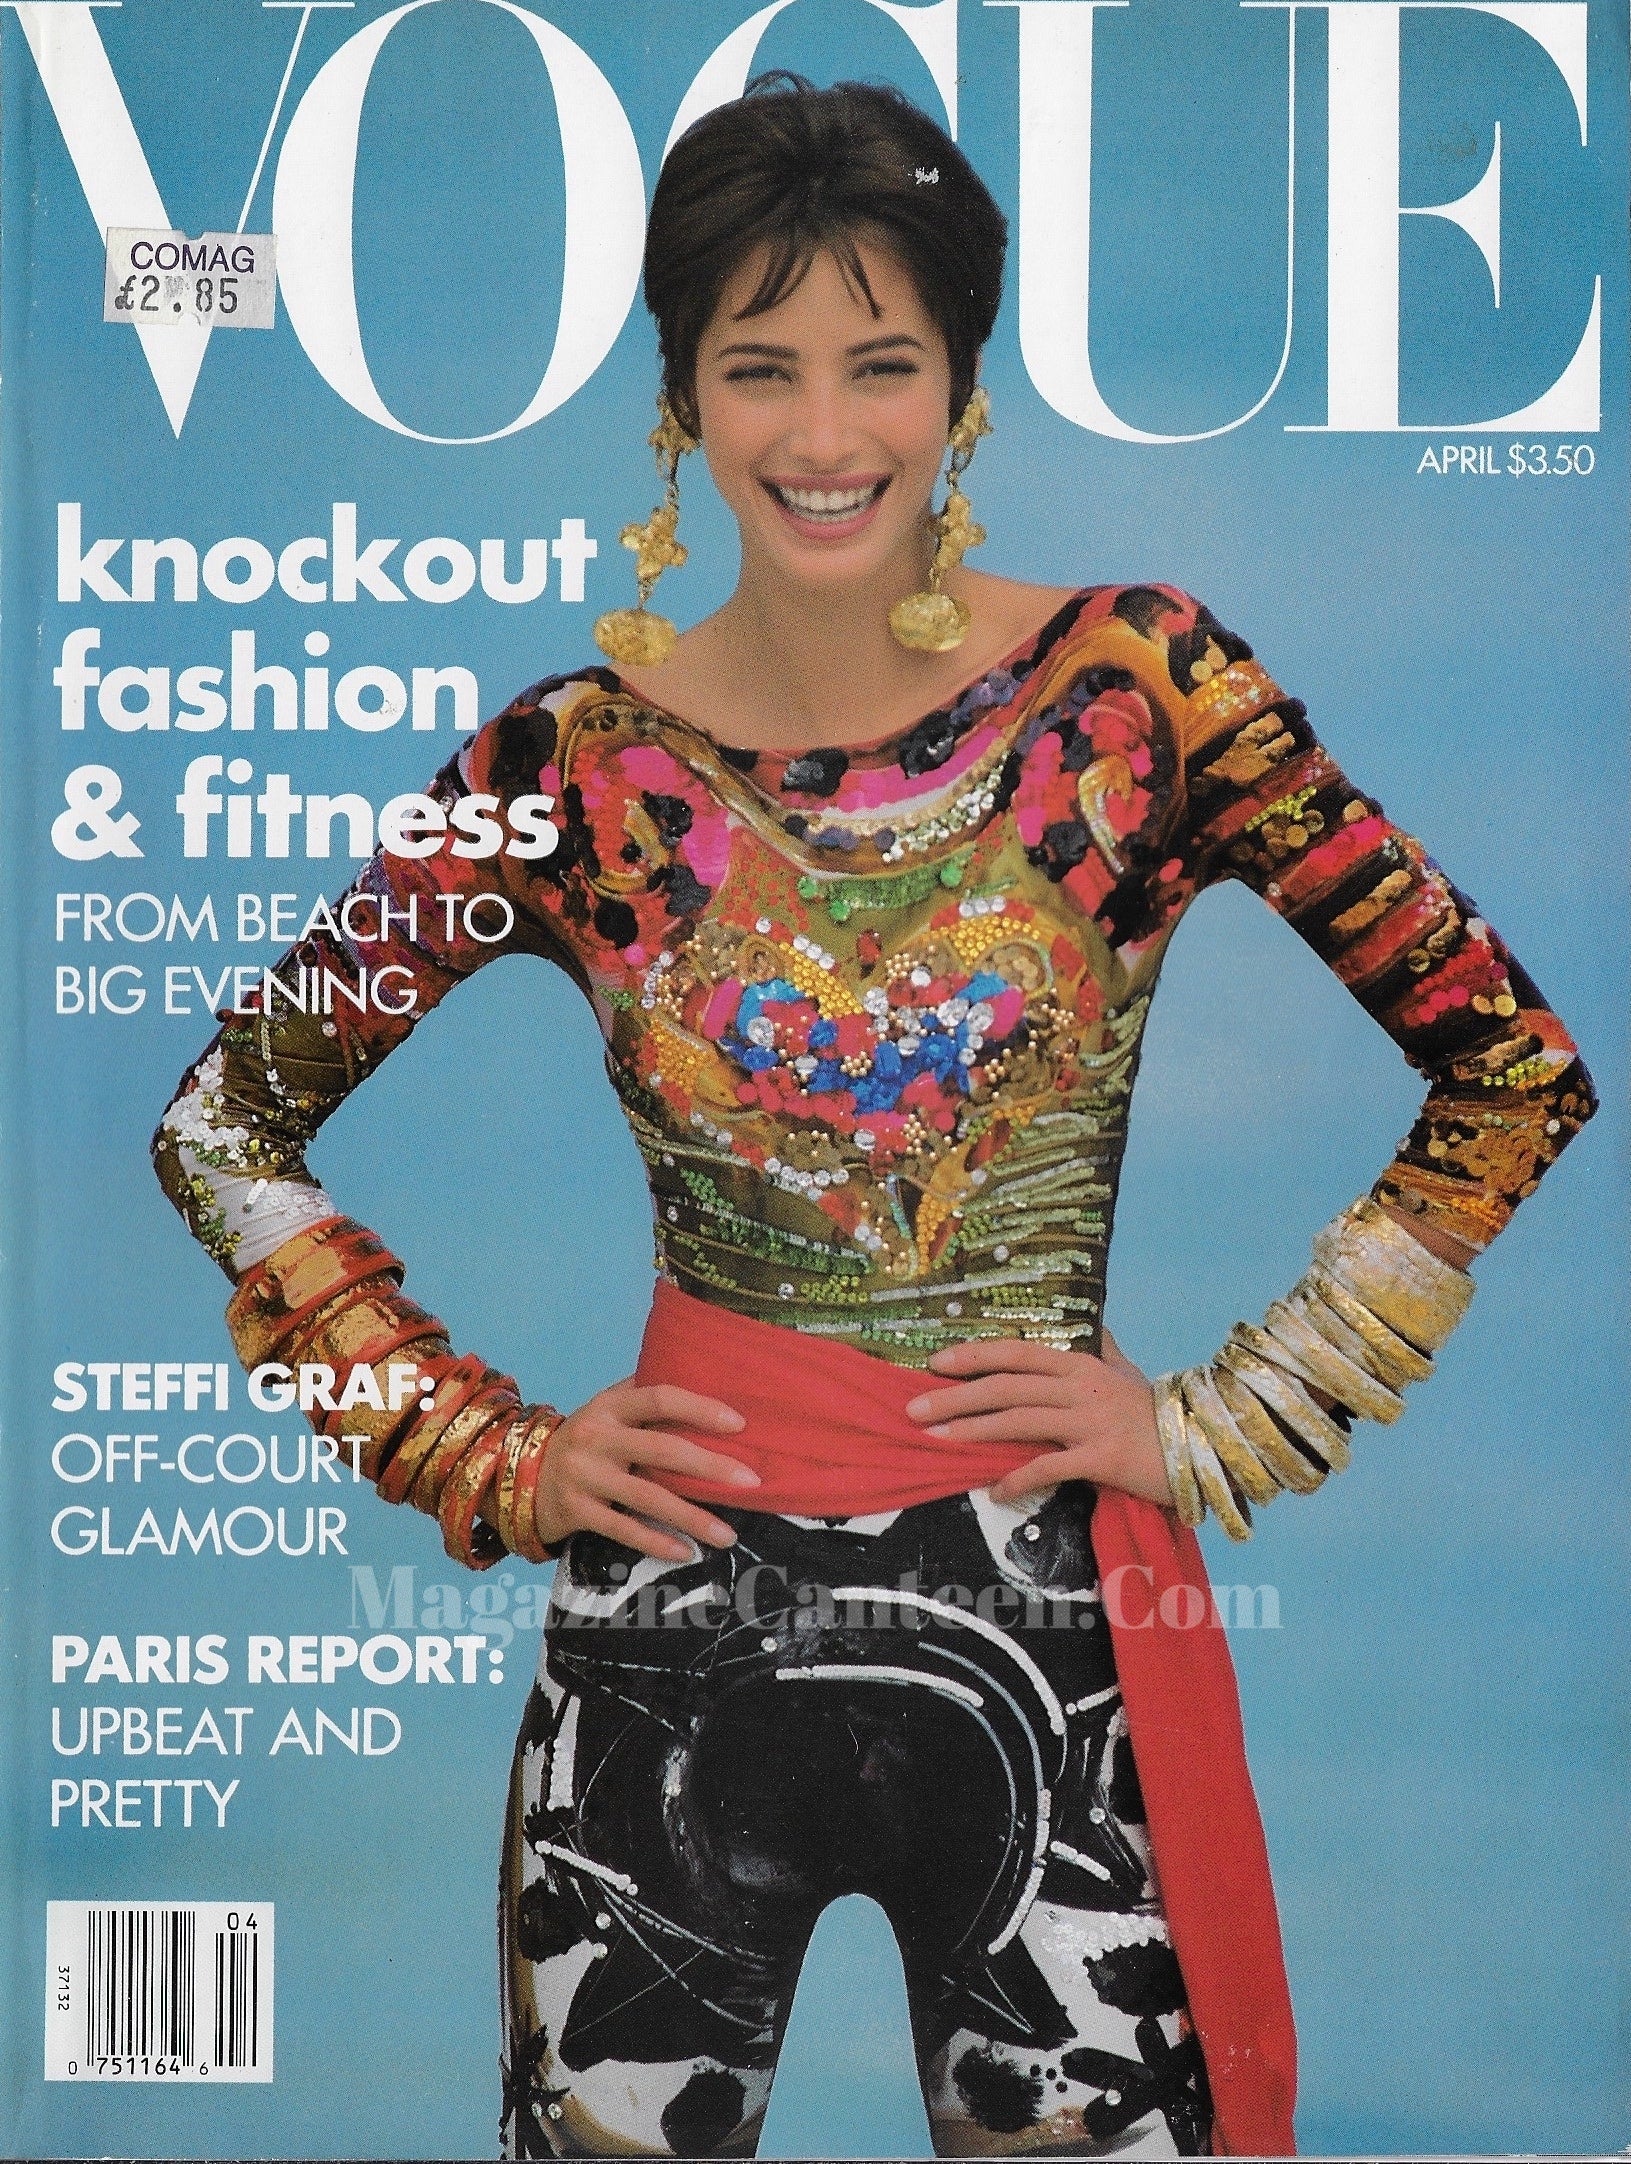 Vogue USA Magazine April 1990 - Christy Turlington